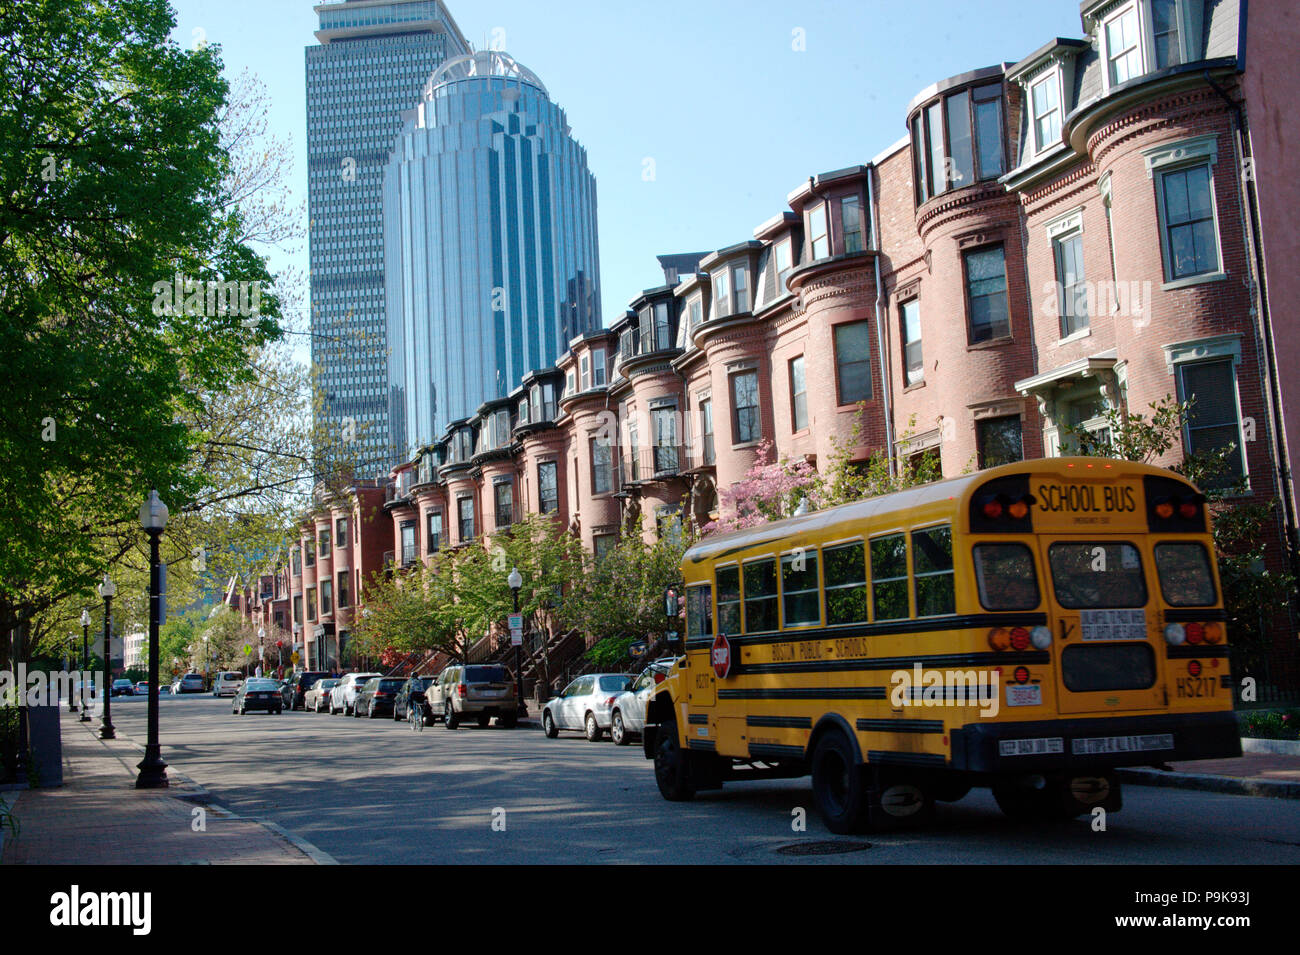 School bus in downtown Boston, MA Stock Photo